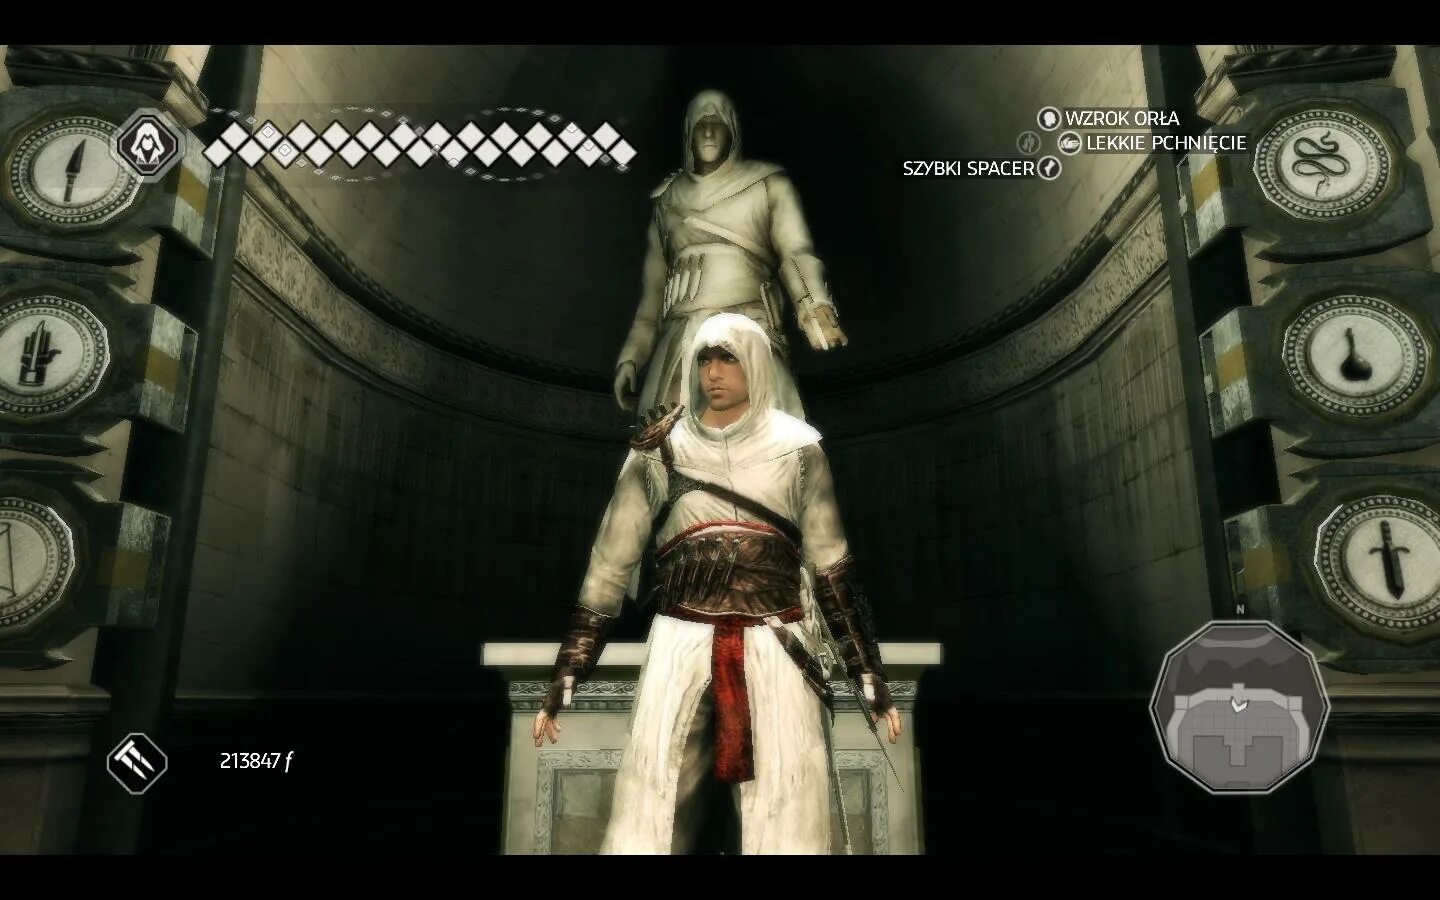 Ассасин Крид 2 мудрецы опирались. Assassin's Creed 2 мудрецы опирались. Мудрецы опирались на великое могущество Assassin's Creed 2. Assassins Creed 2 опирались. Мудрецы опирались на великое